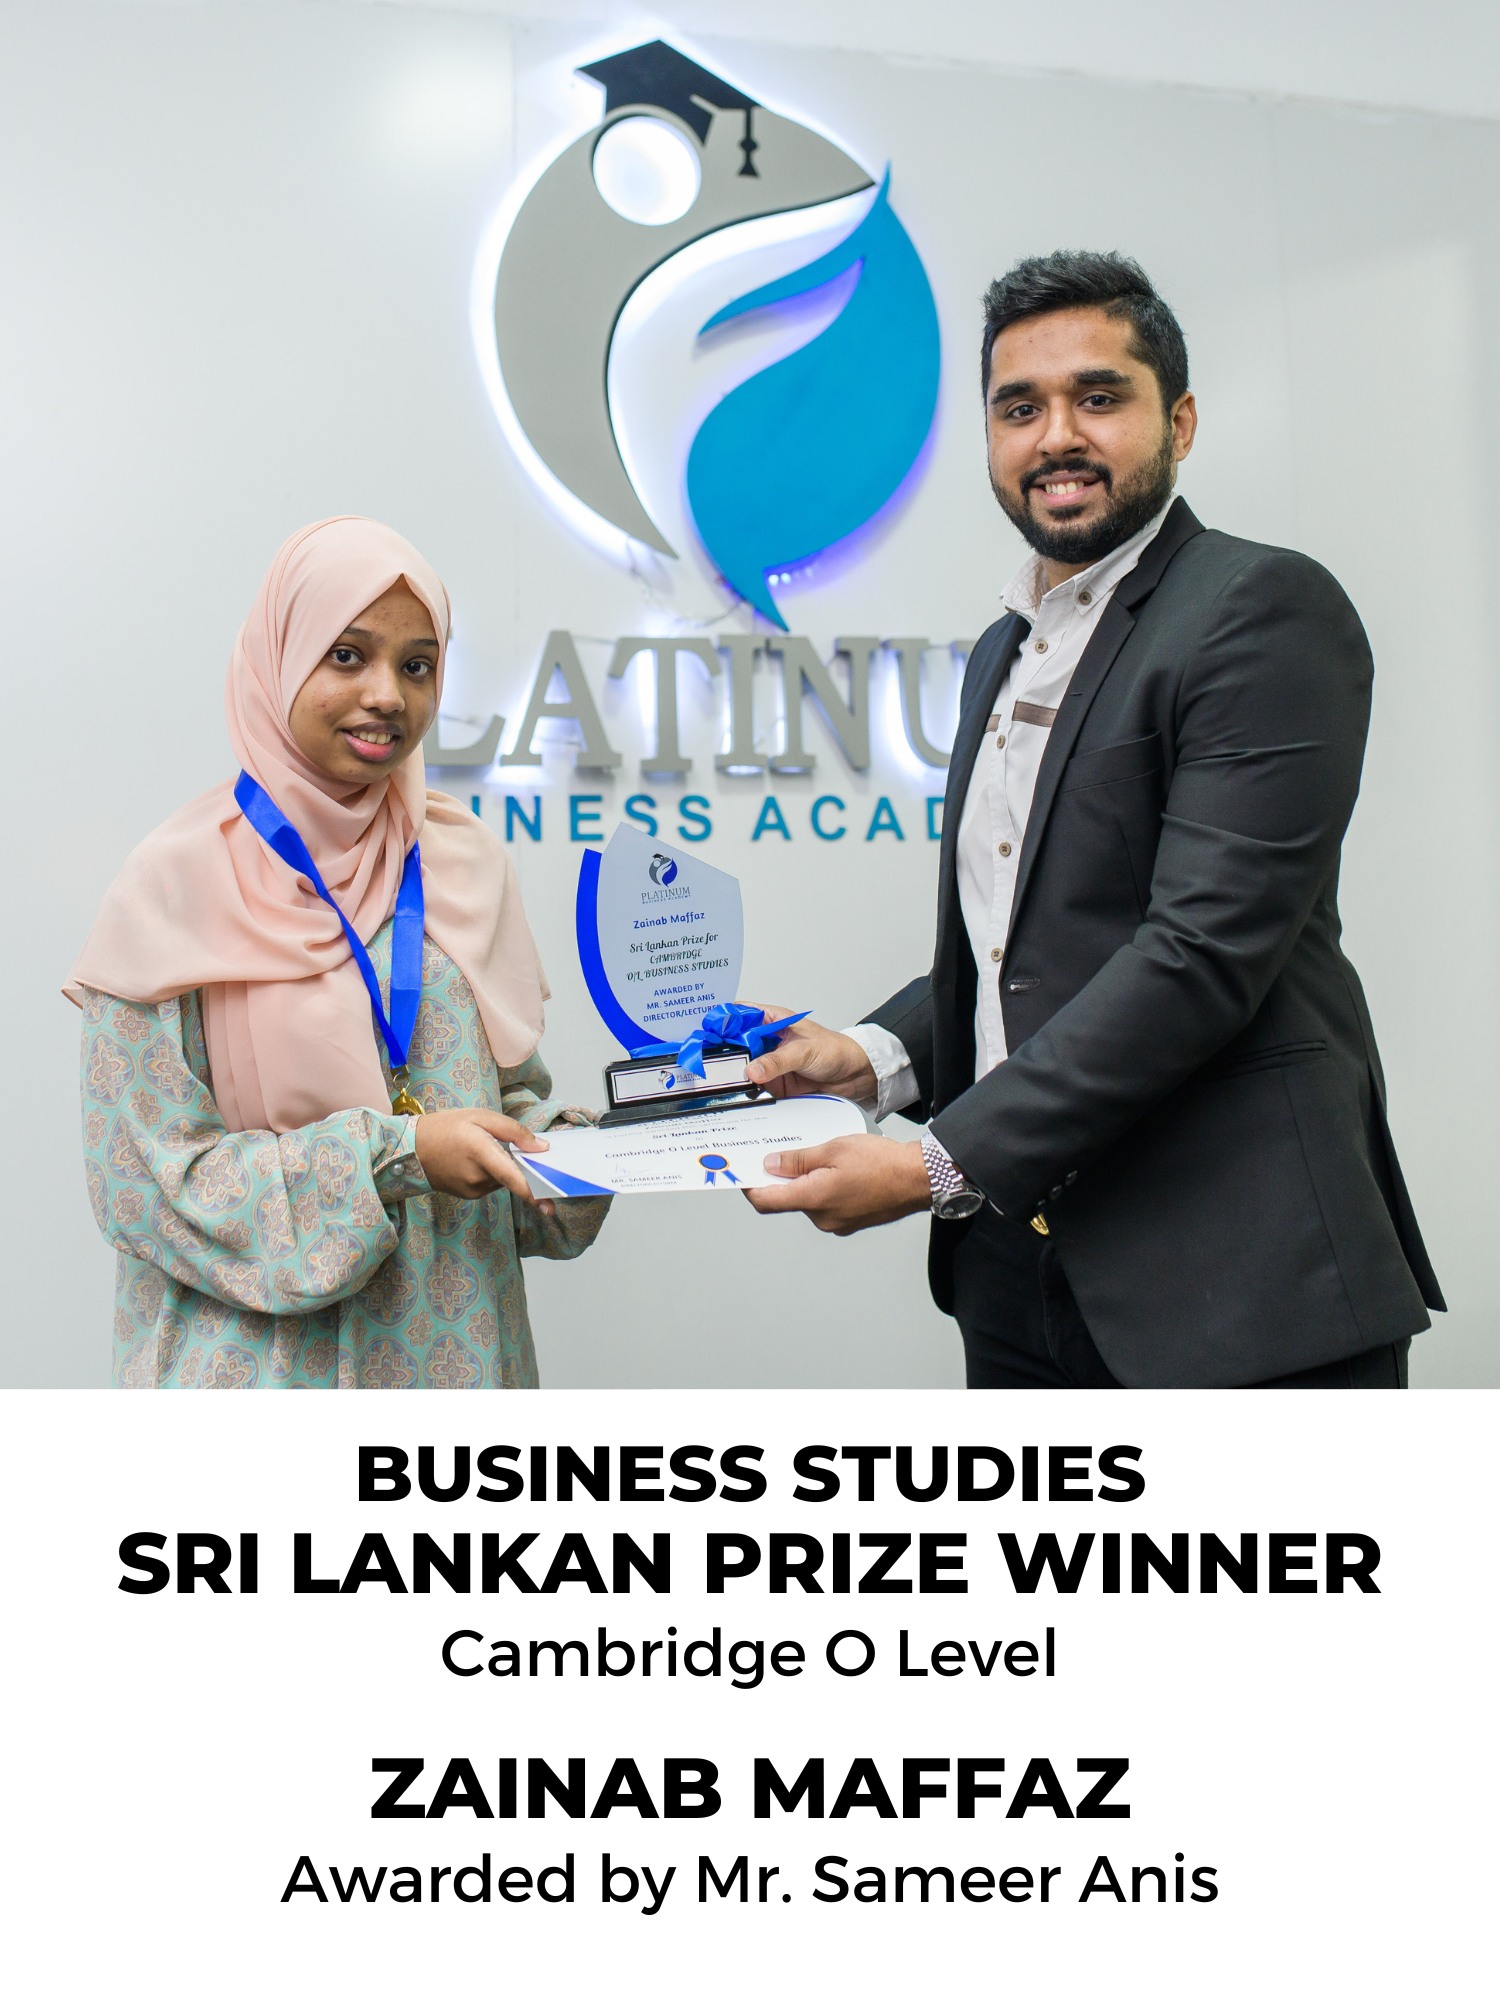 Cambridge O'Level Business Studies Sri Lanka Prize Winner Zainab Maffaz.
Lecturer: Mr. Sameer Anis